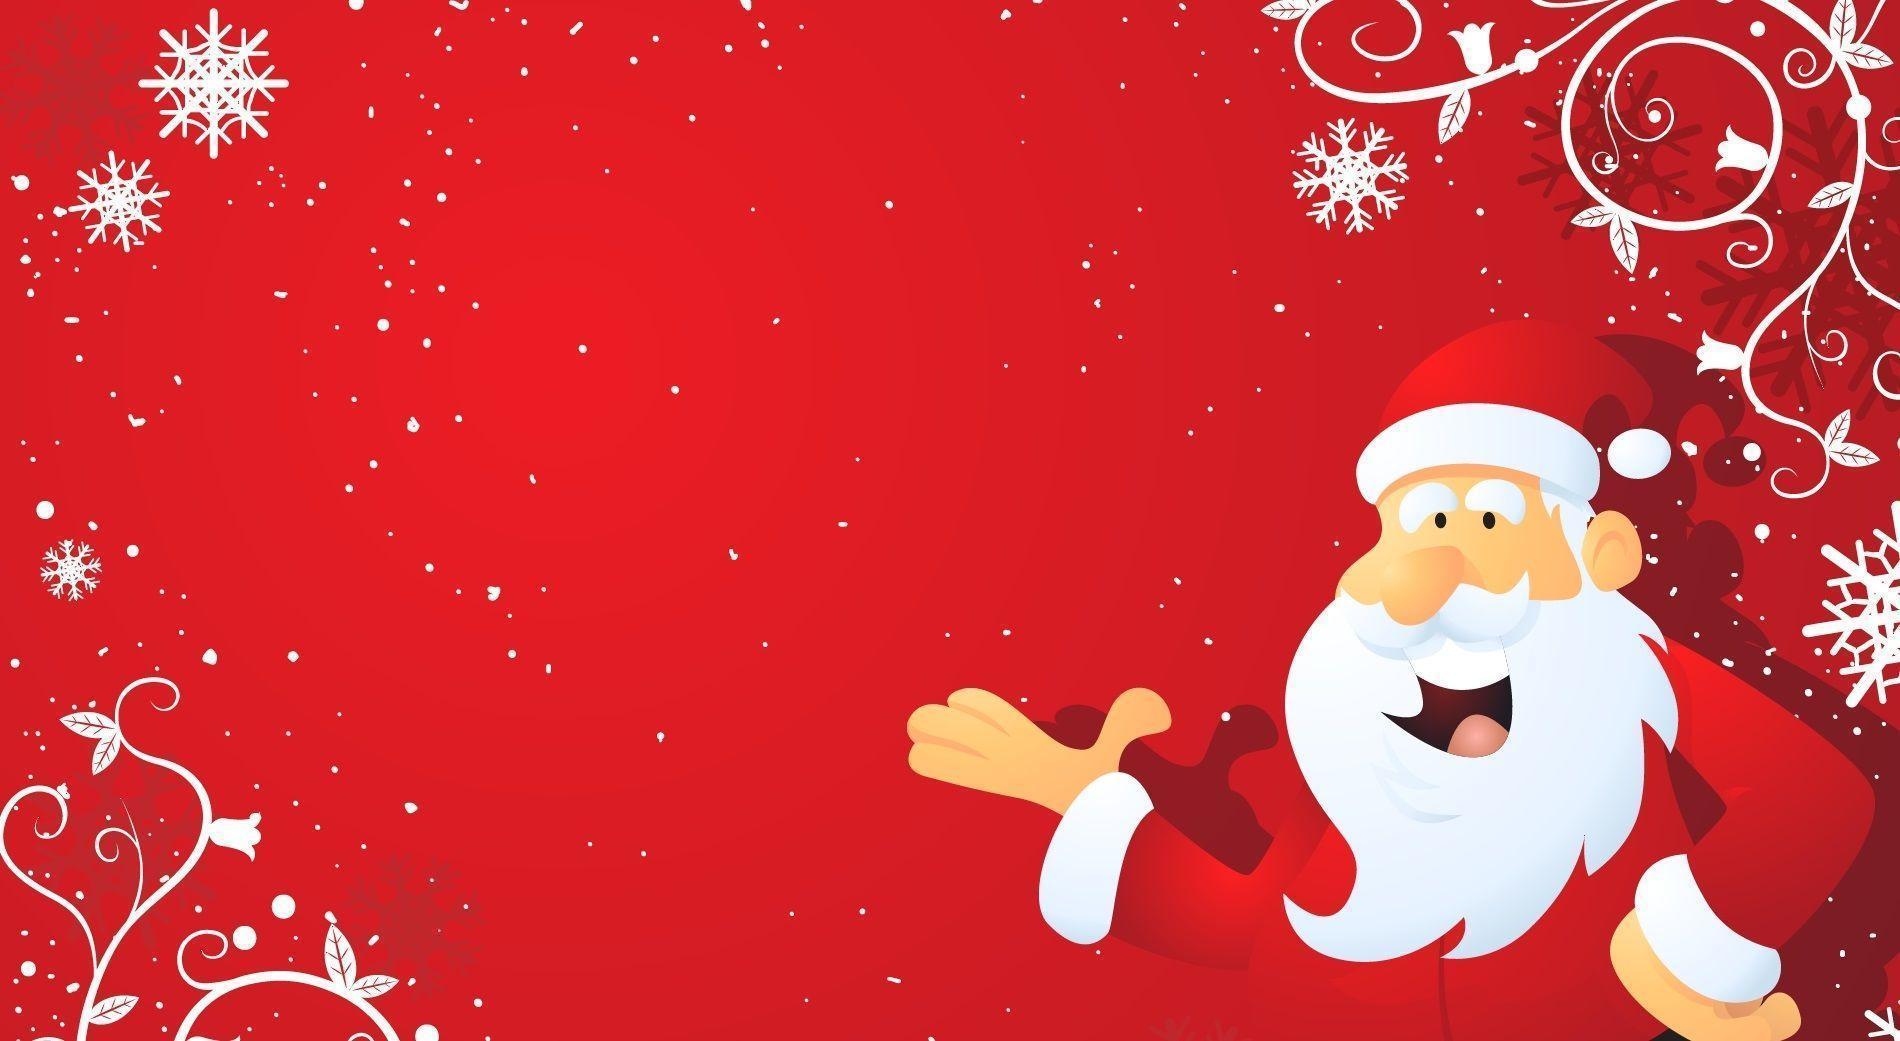 Santa Claus backgroundHello Holidays, Holidays Time, Holidays Picture